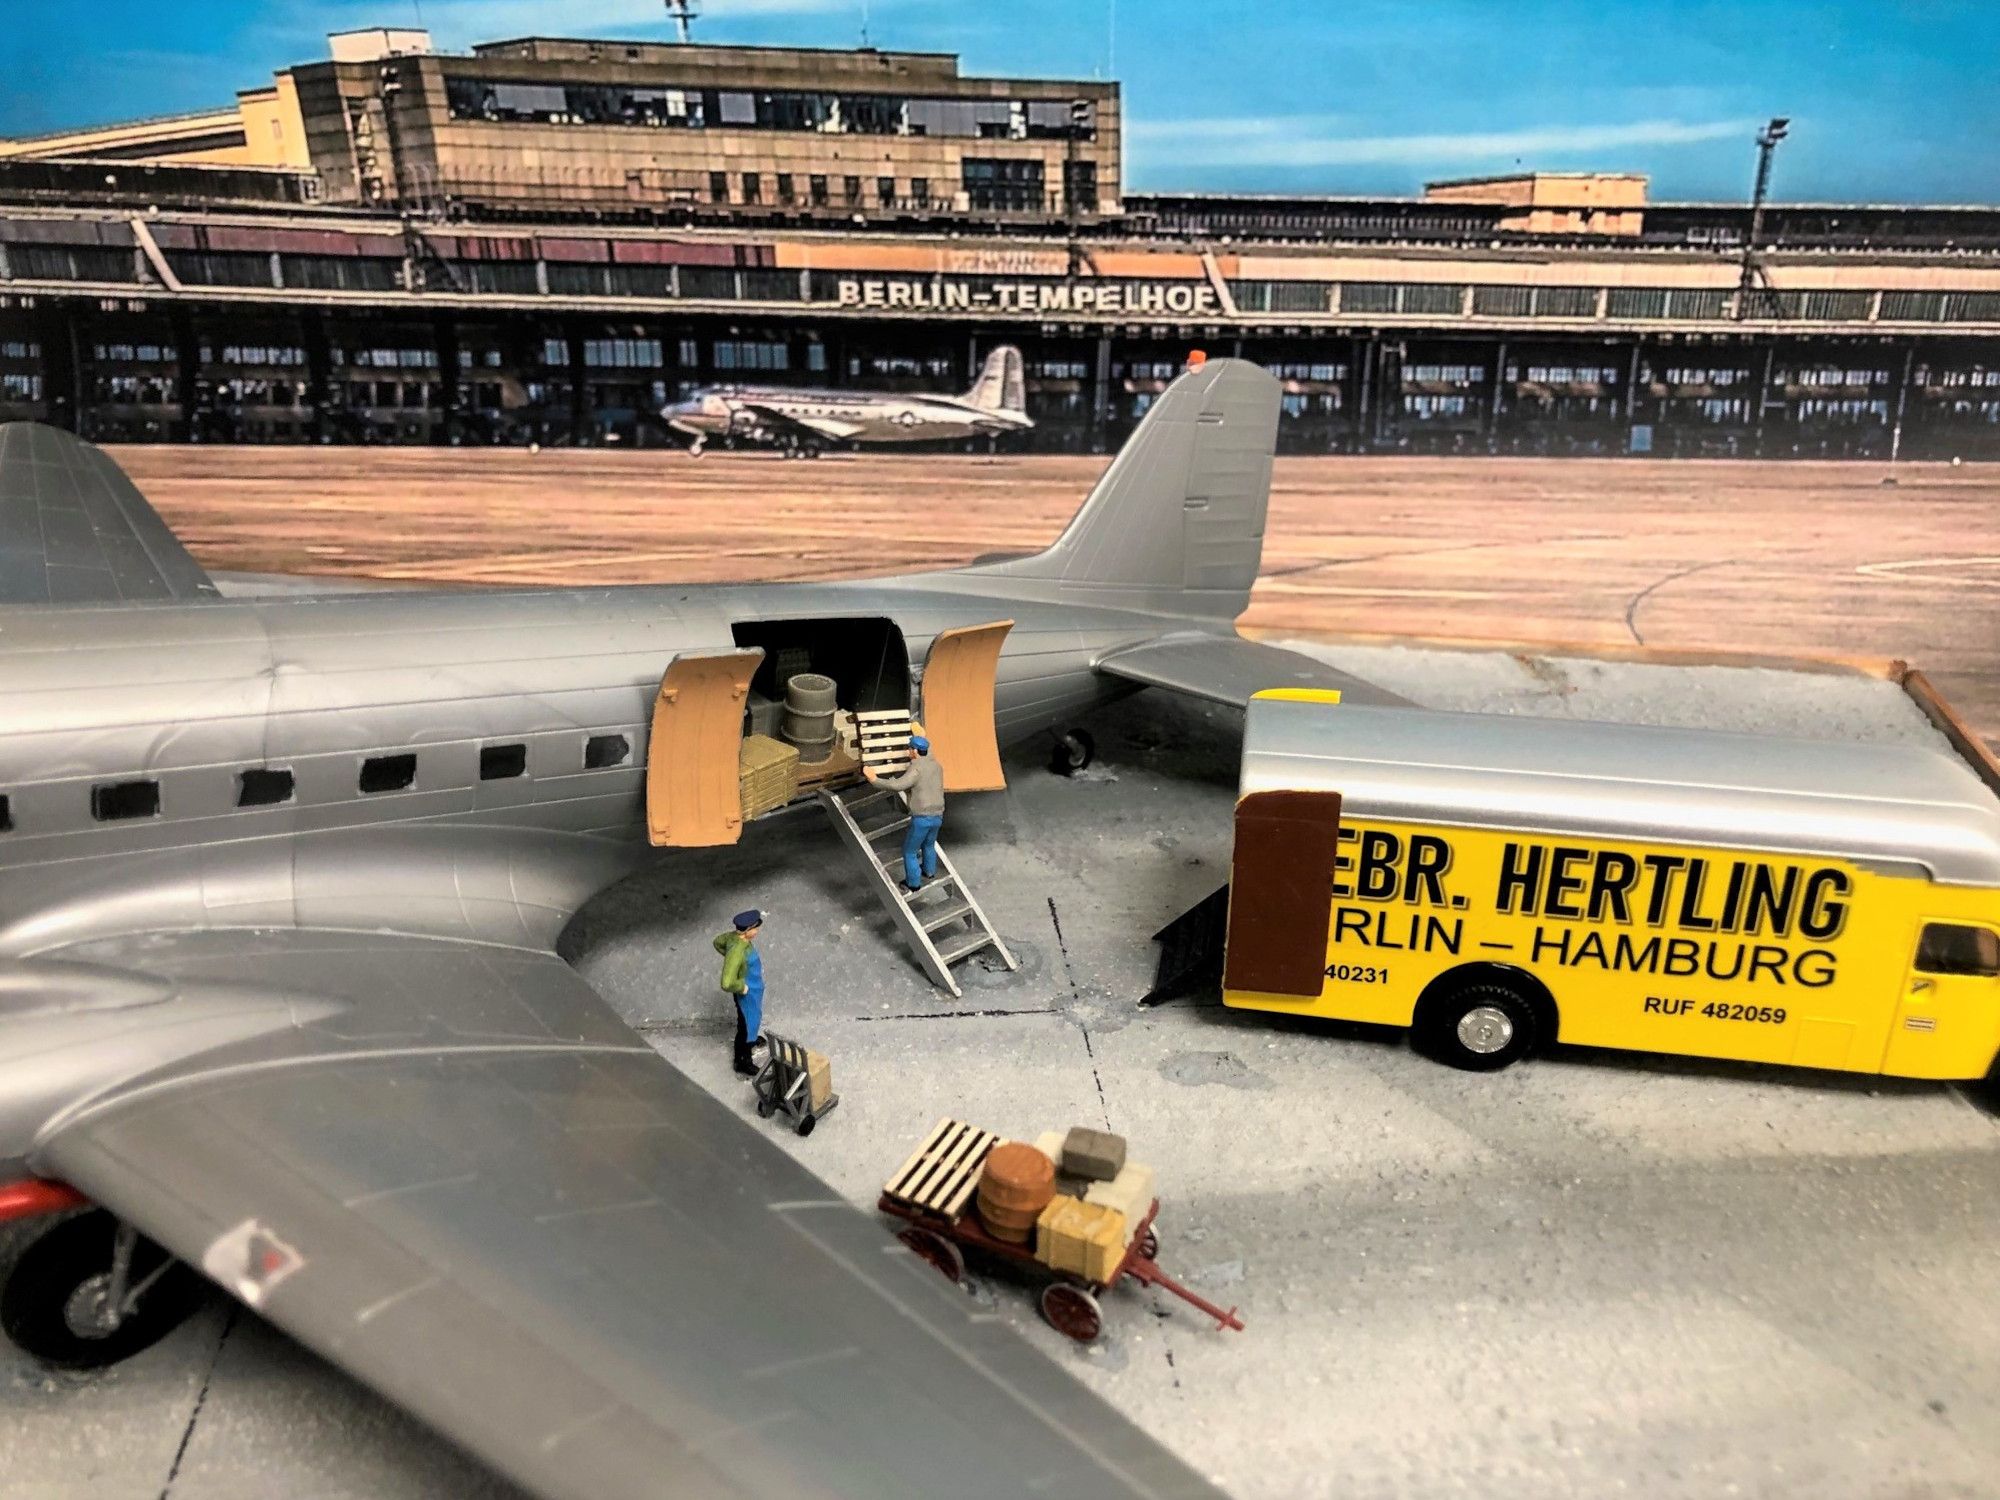 HERTLING Airlift Berlin model